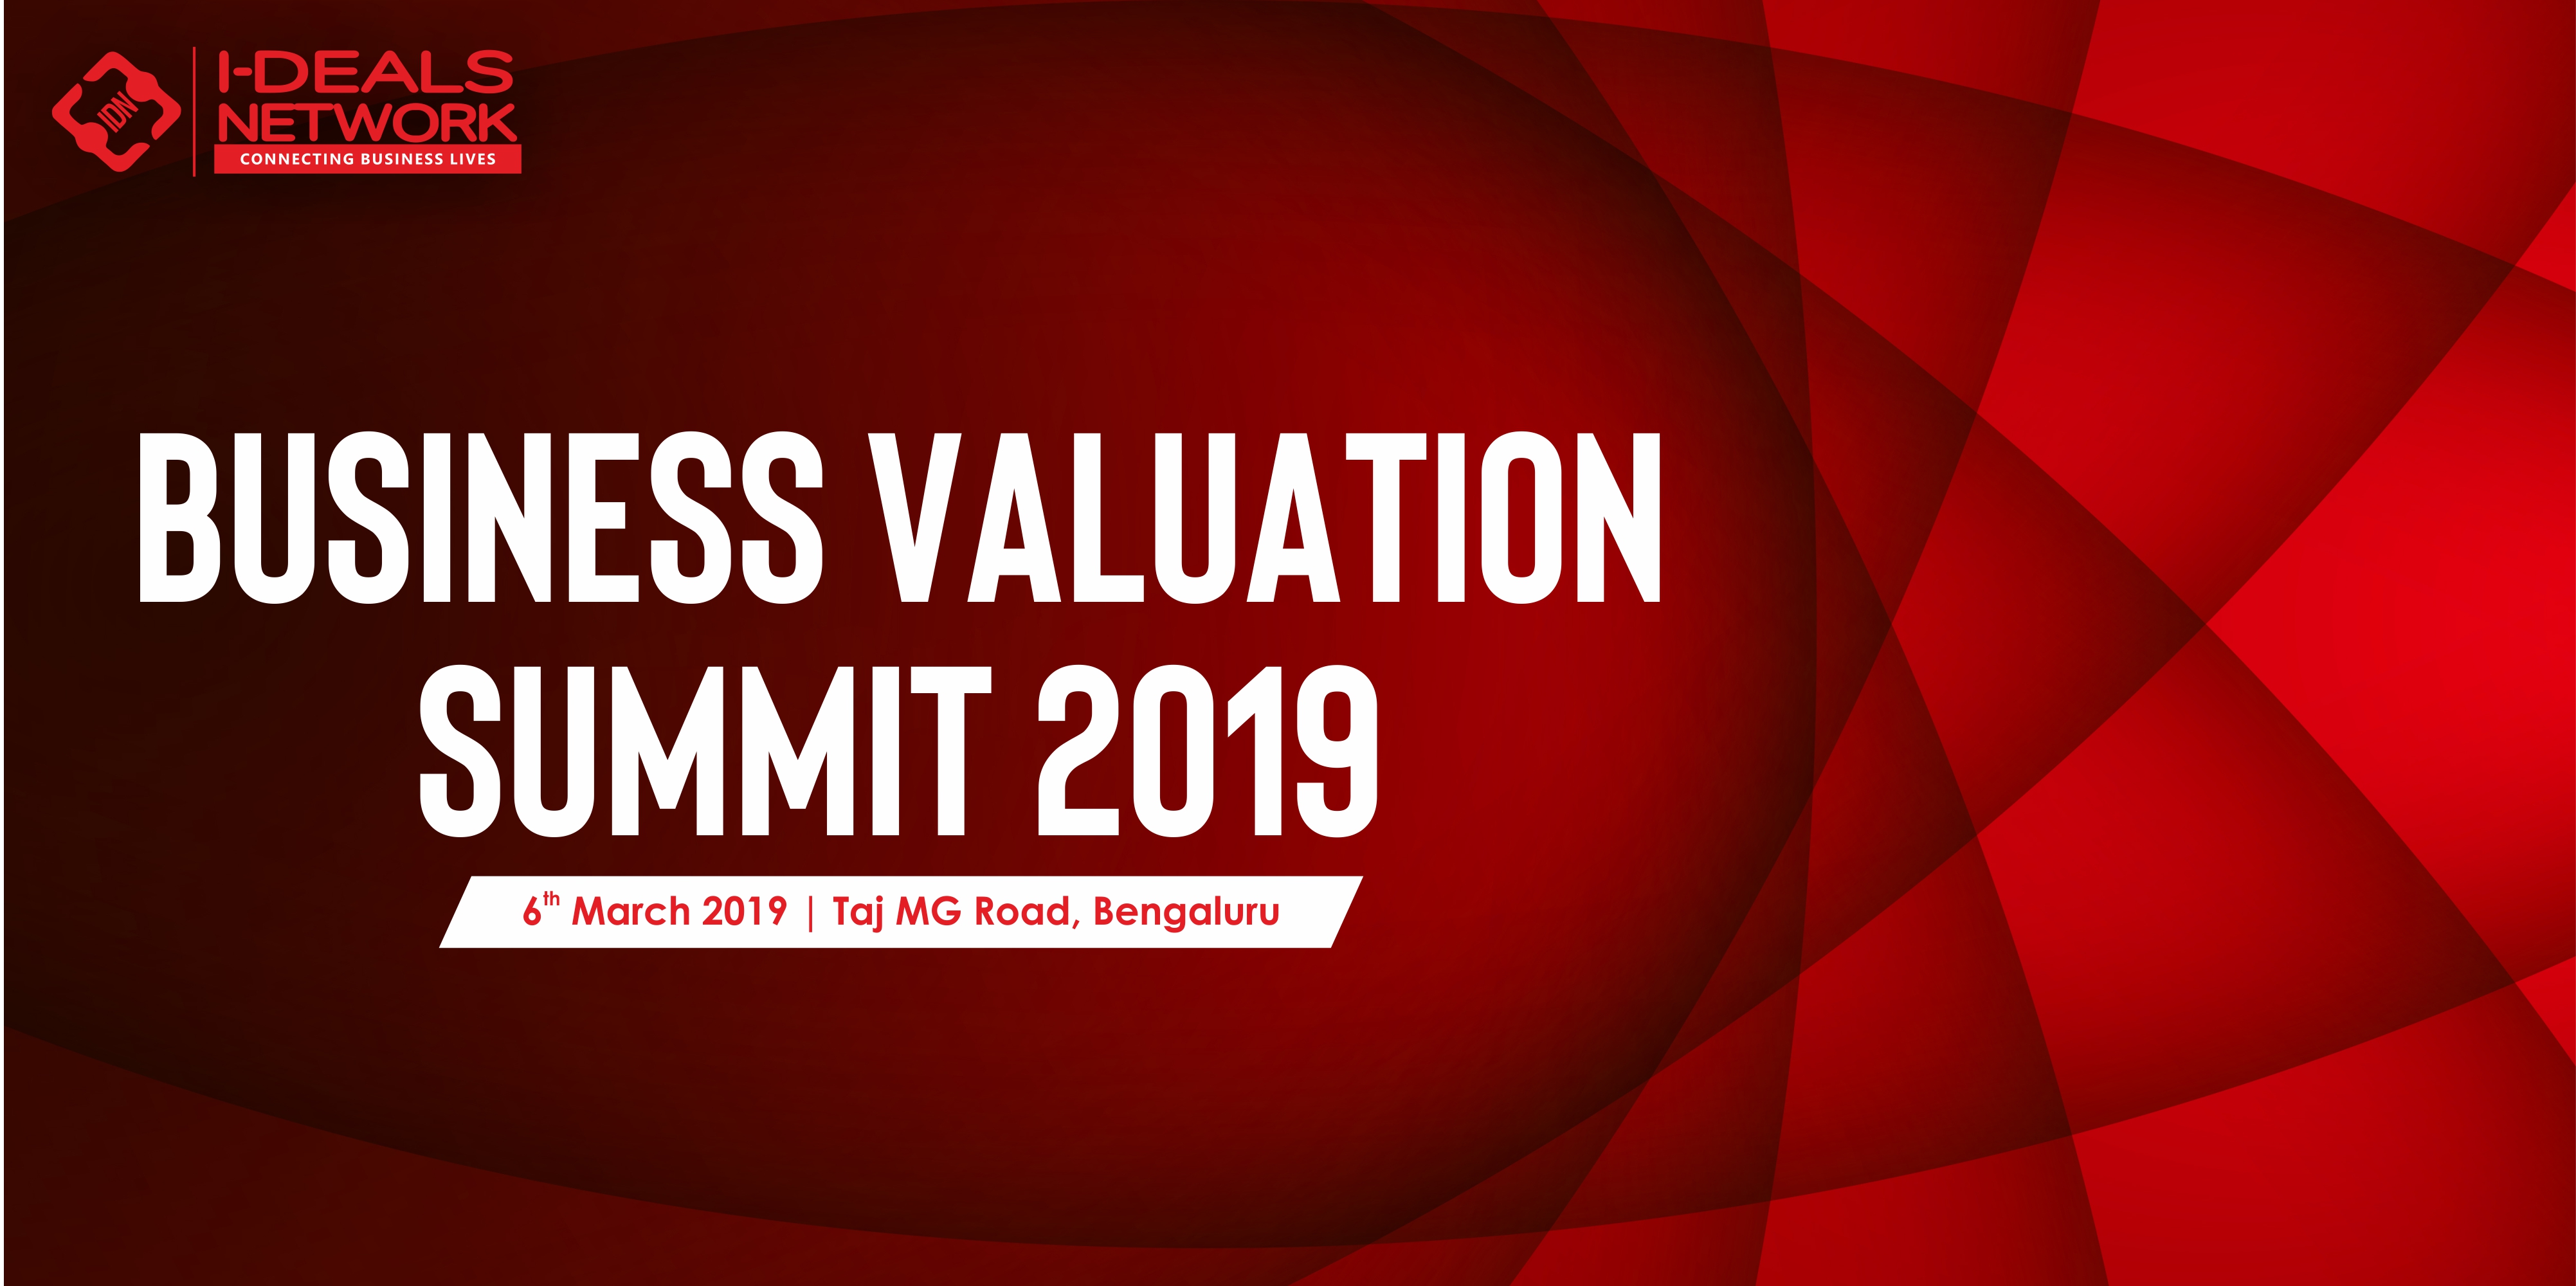 Business Valuation Summit